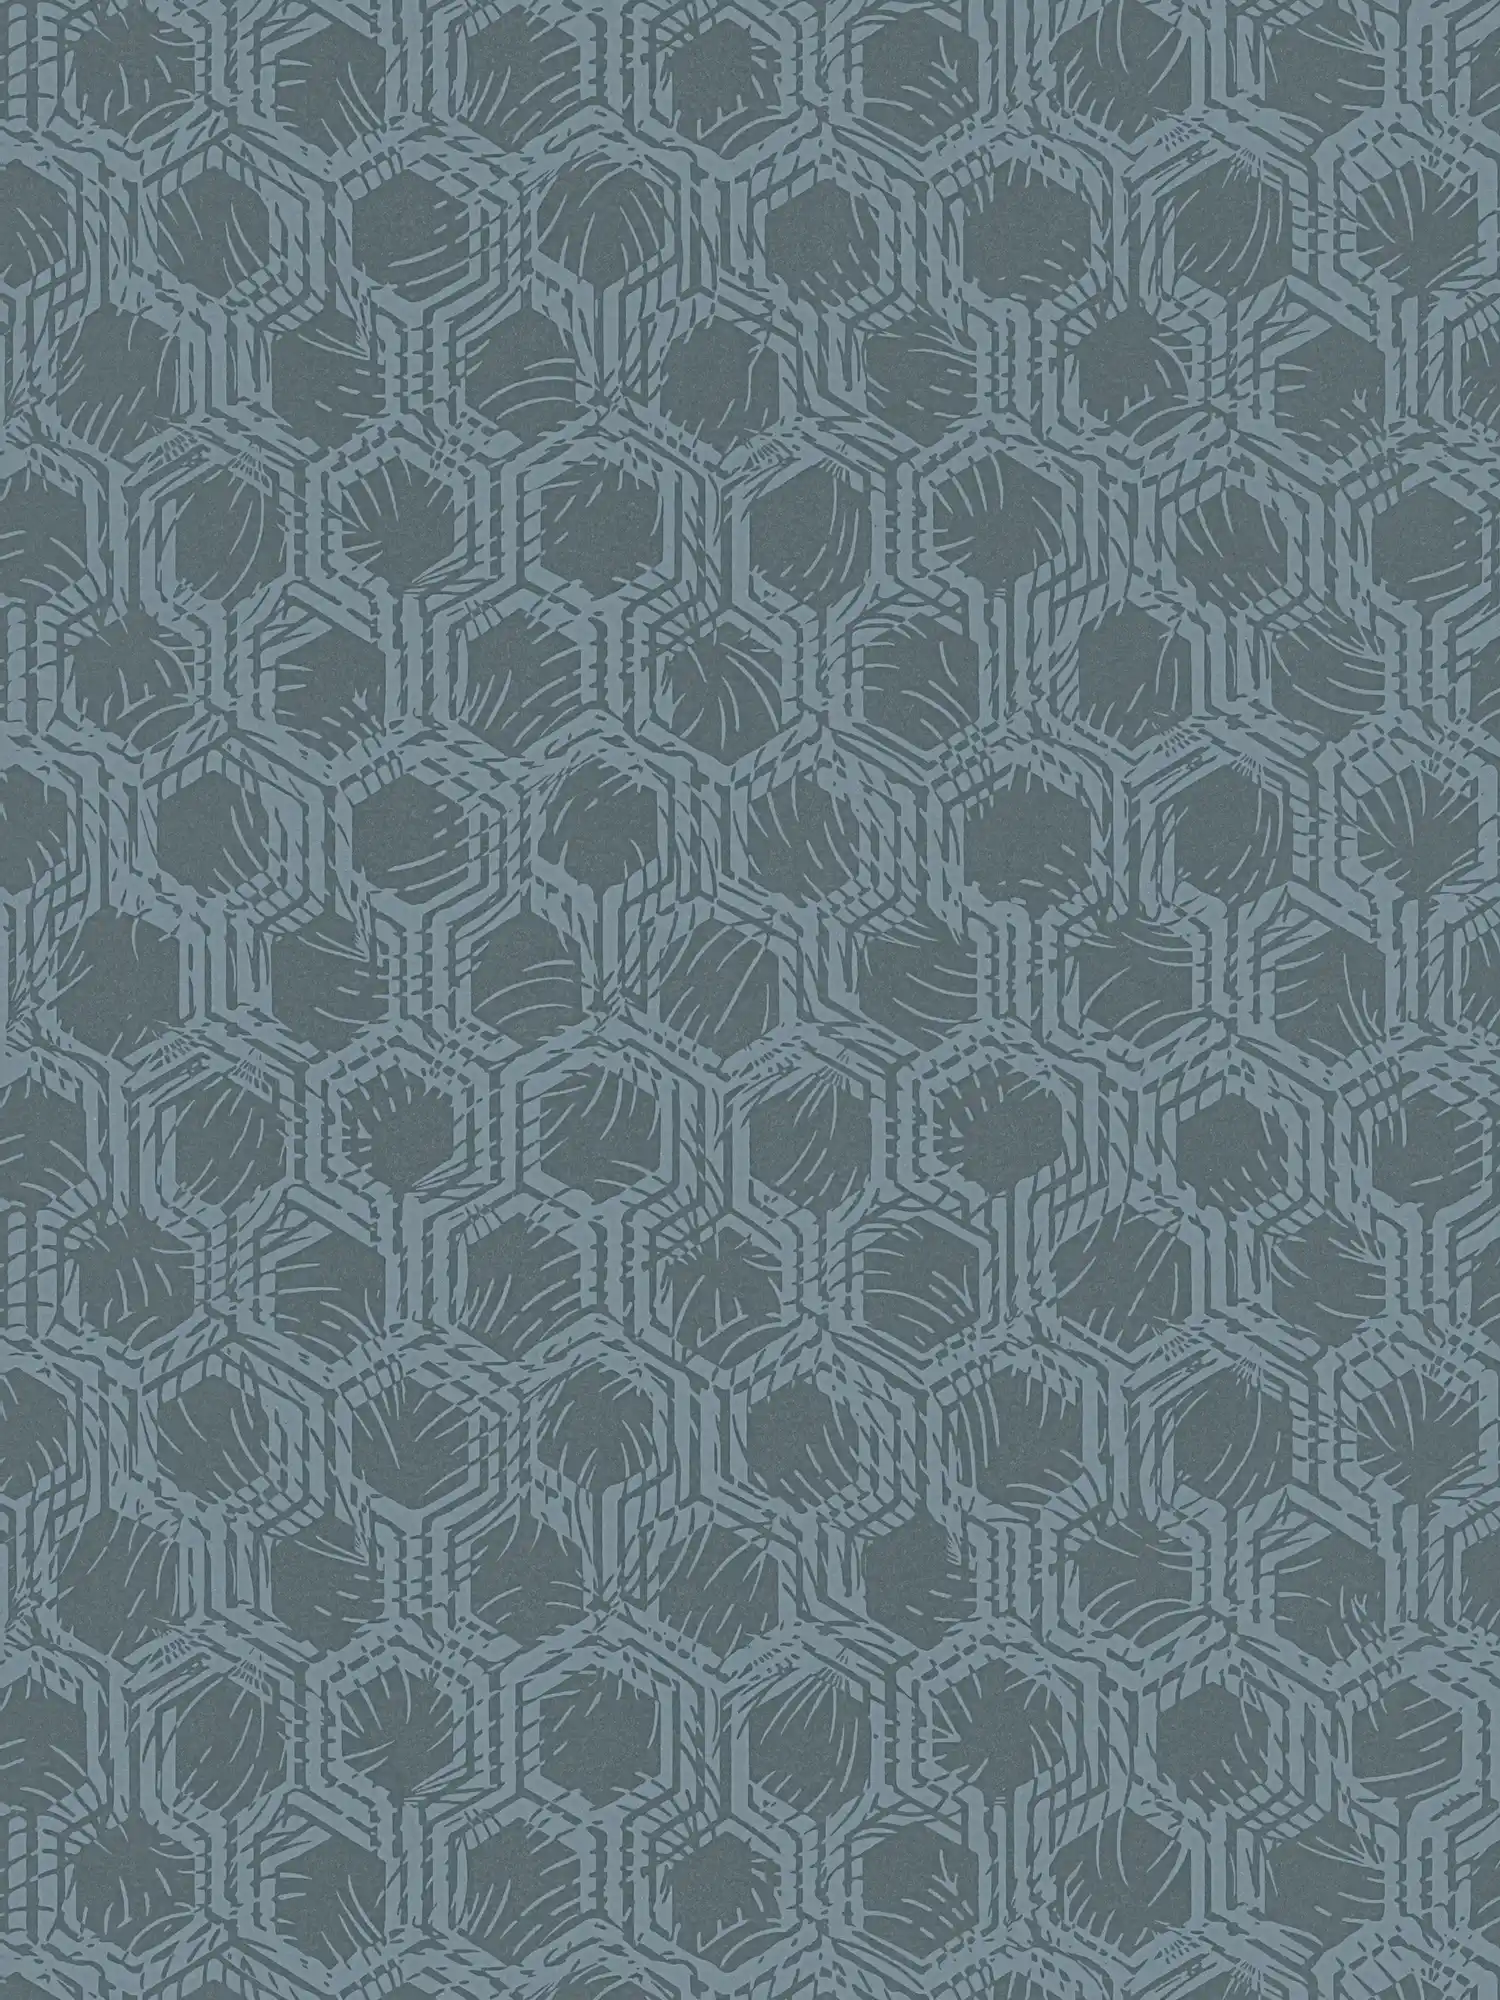 Pattern wallpaper with hexagon pattern in ethnic style - blue, metallic
